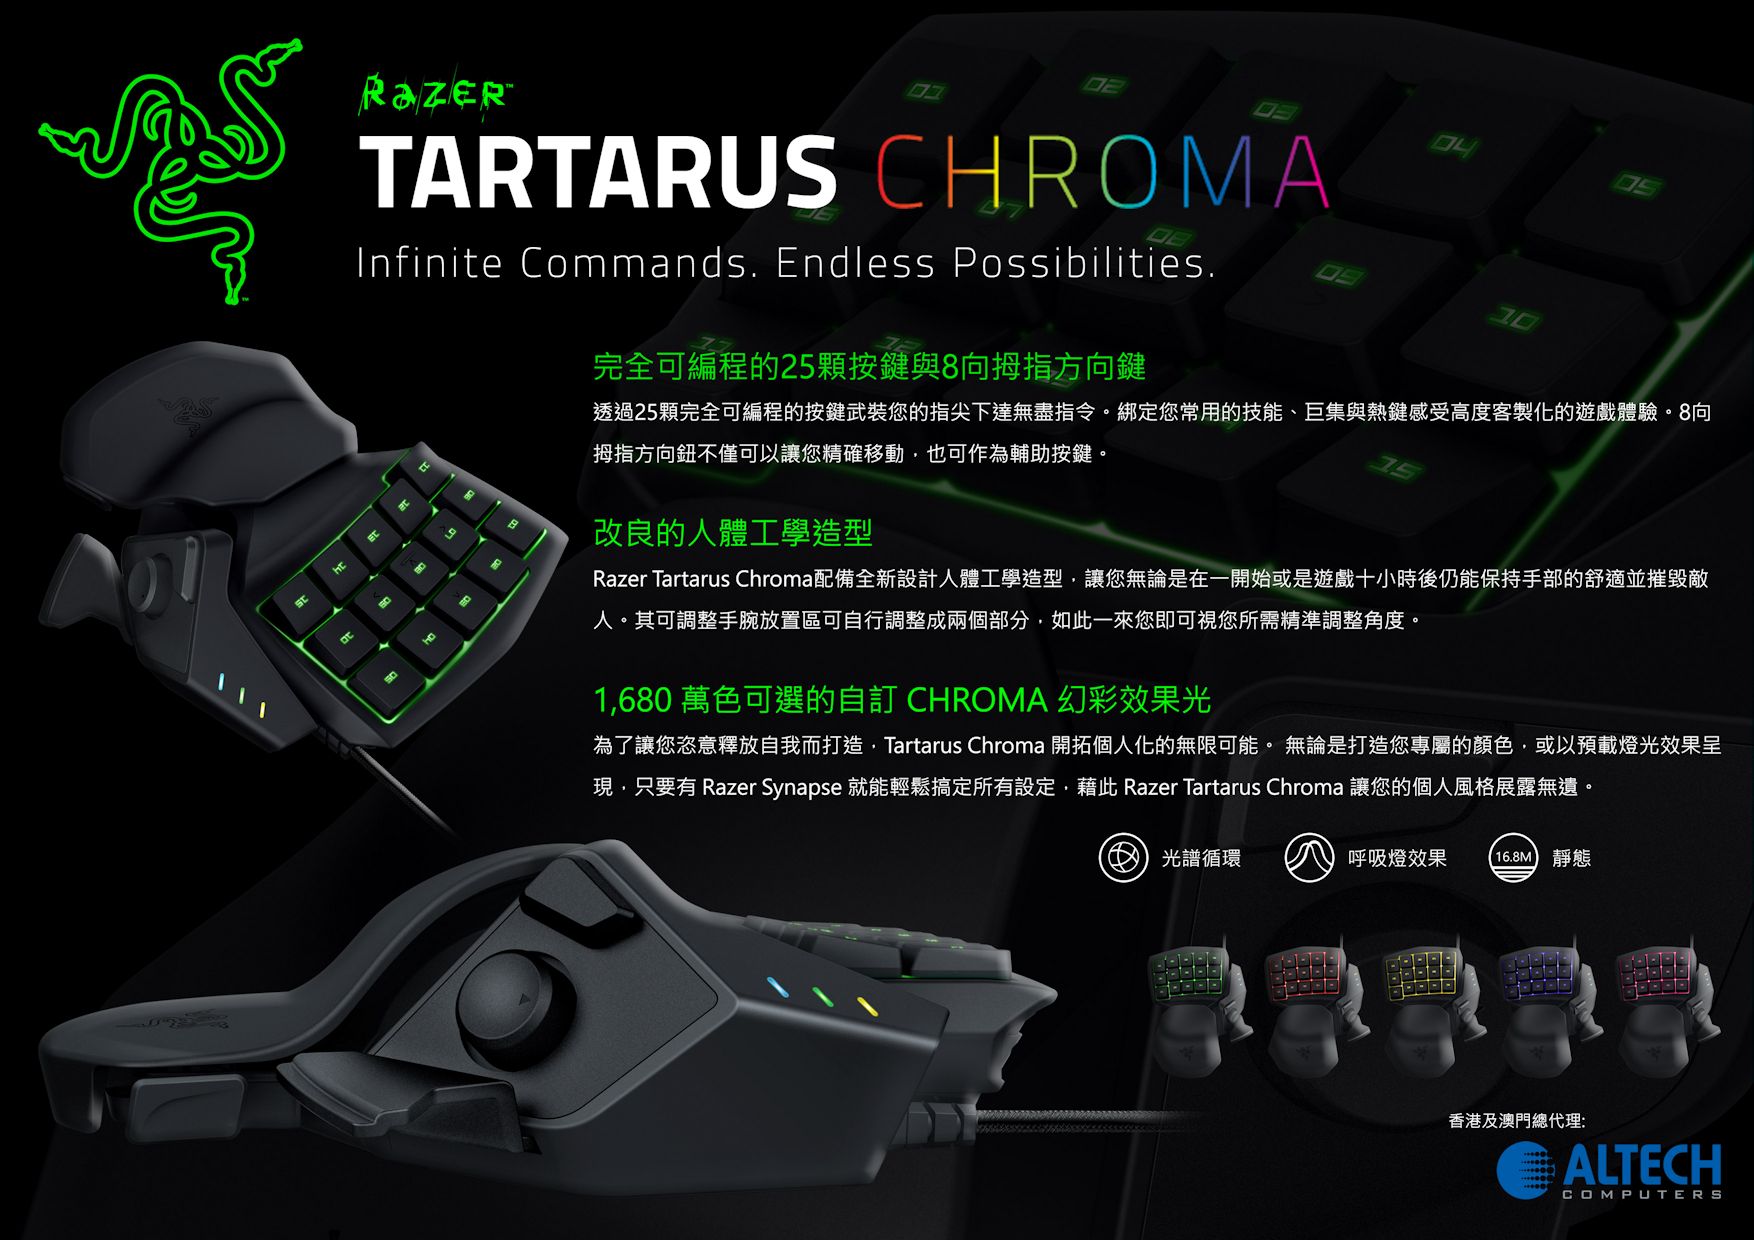 Tartarus Chroma